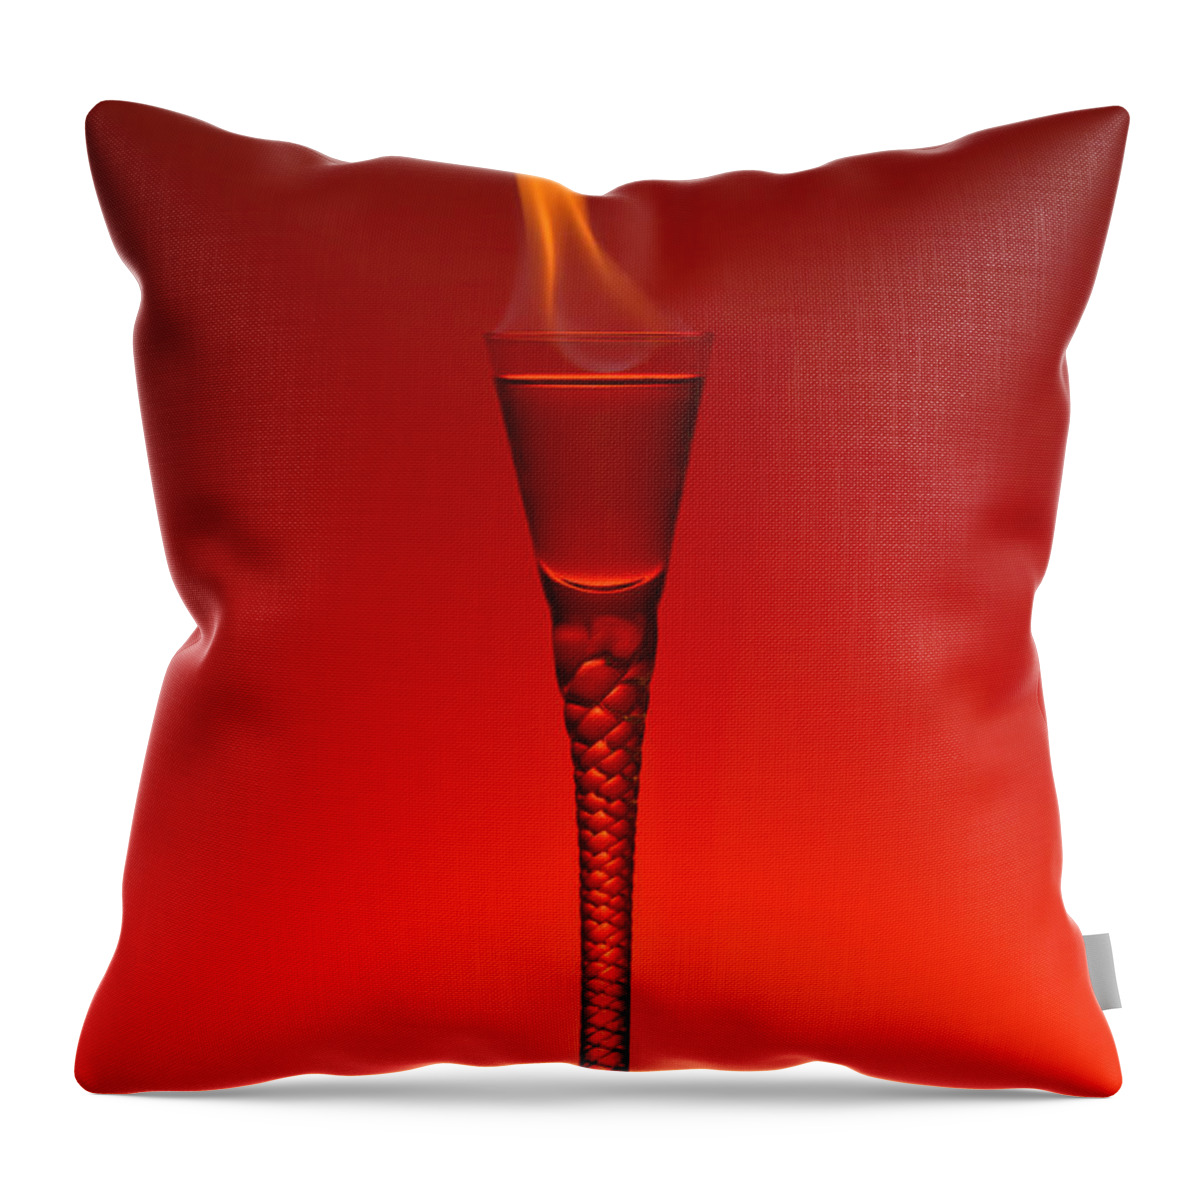 Absinthe Throw Pillow featuring the photograph Flaming Hot by Gert Lavsen